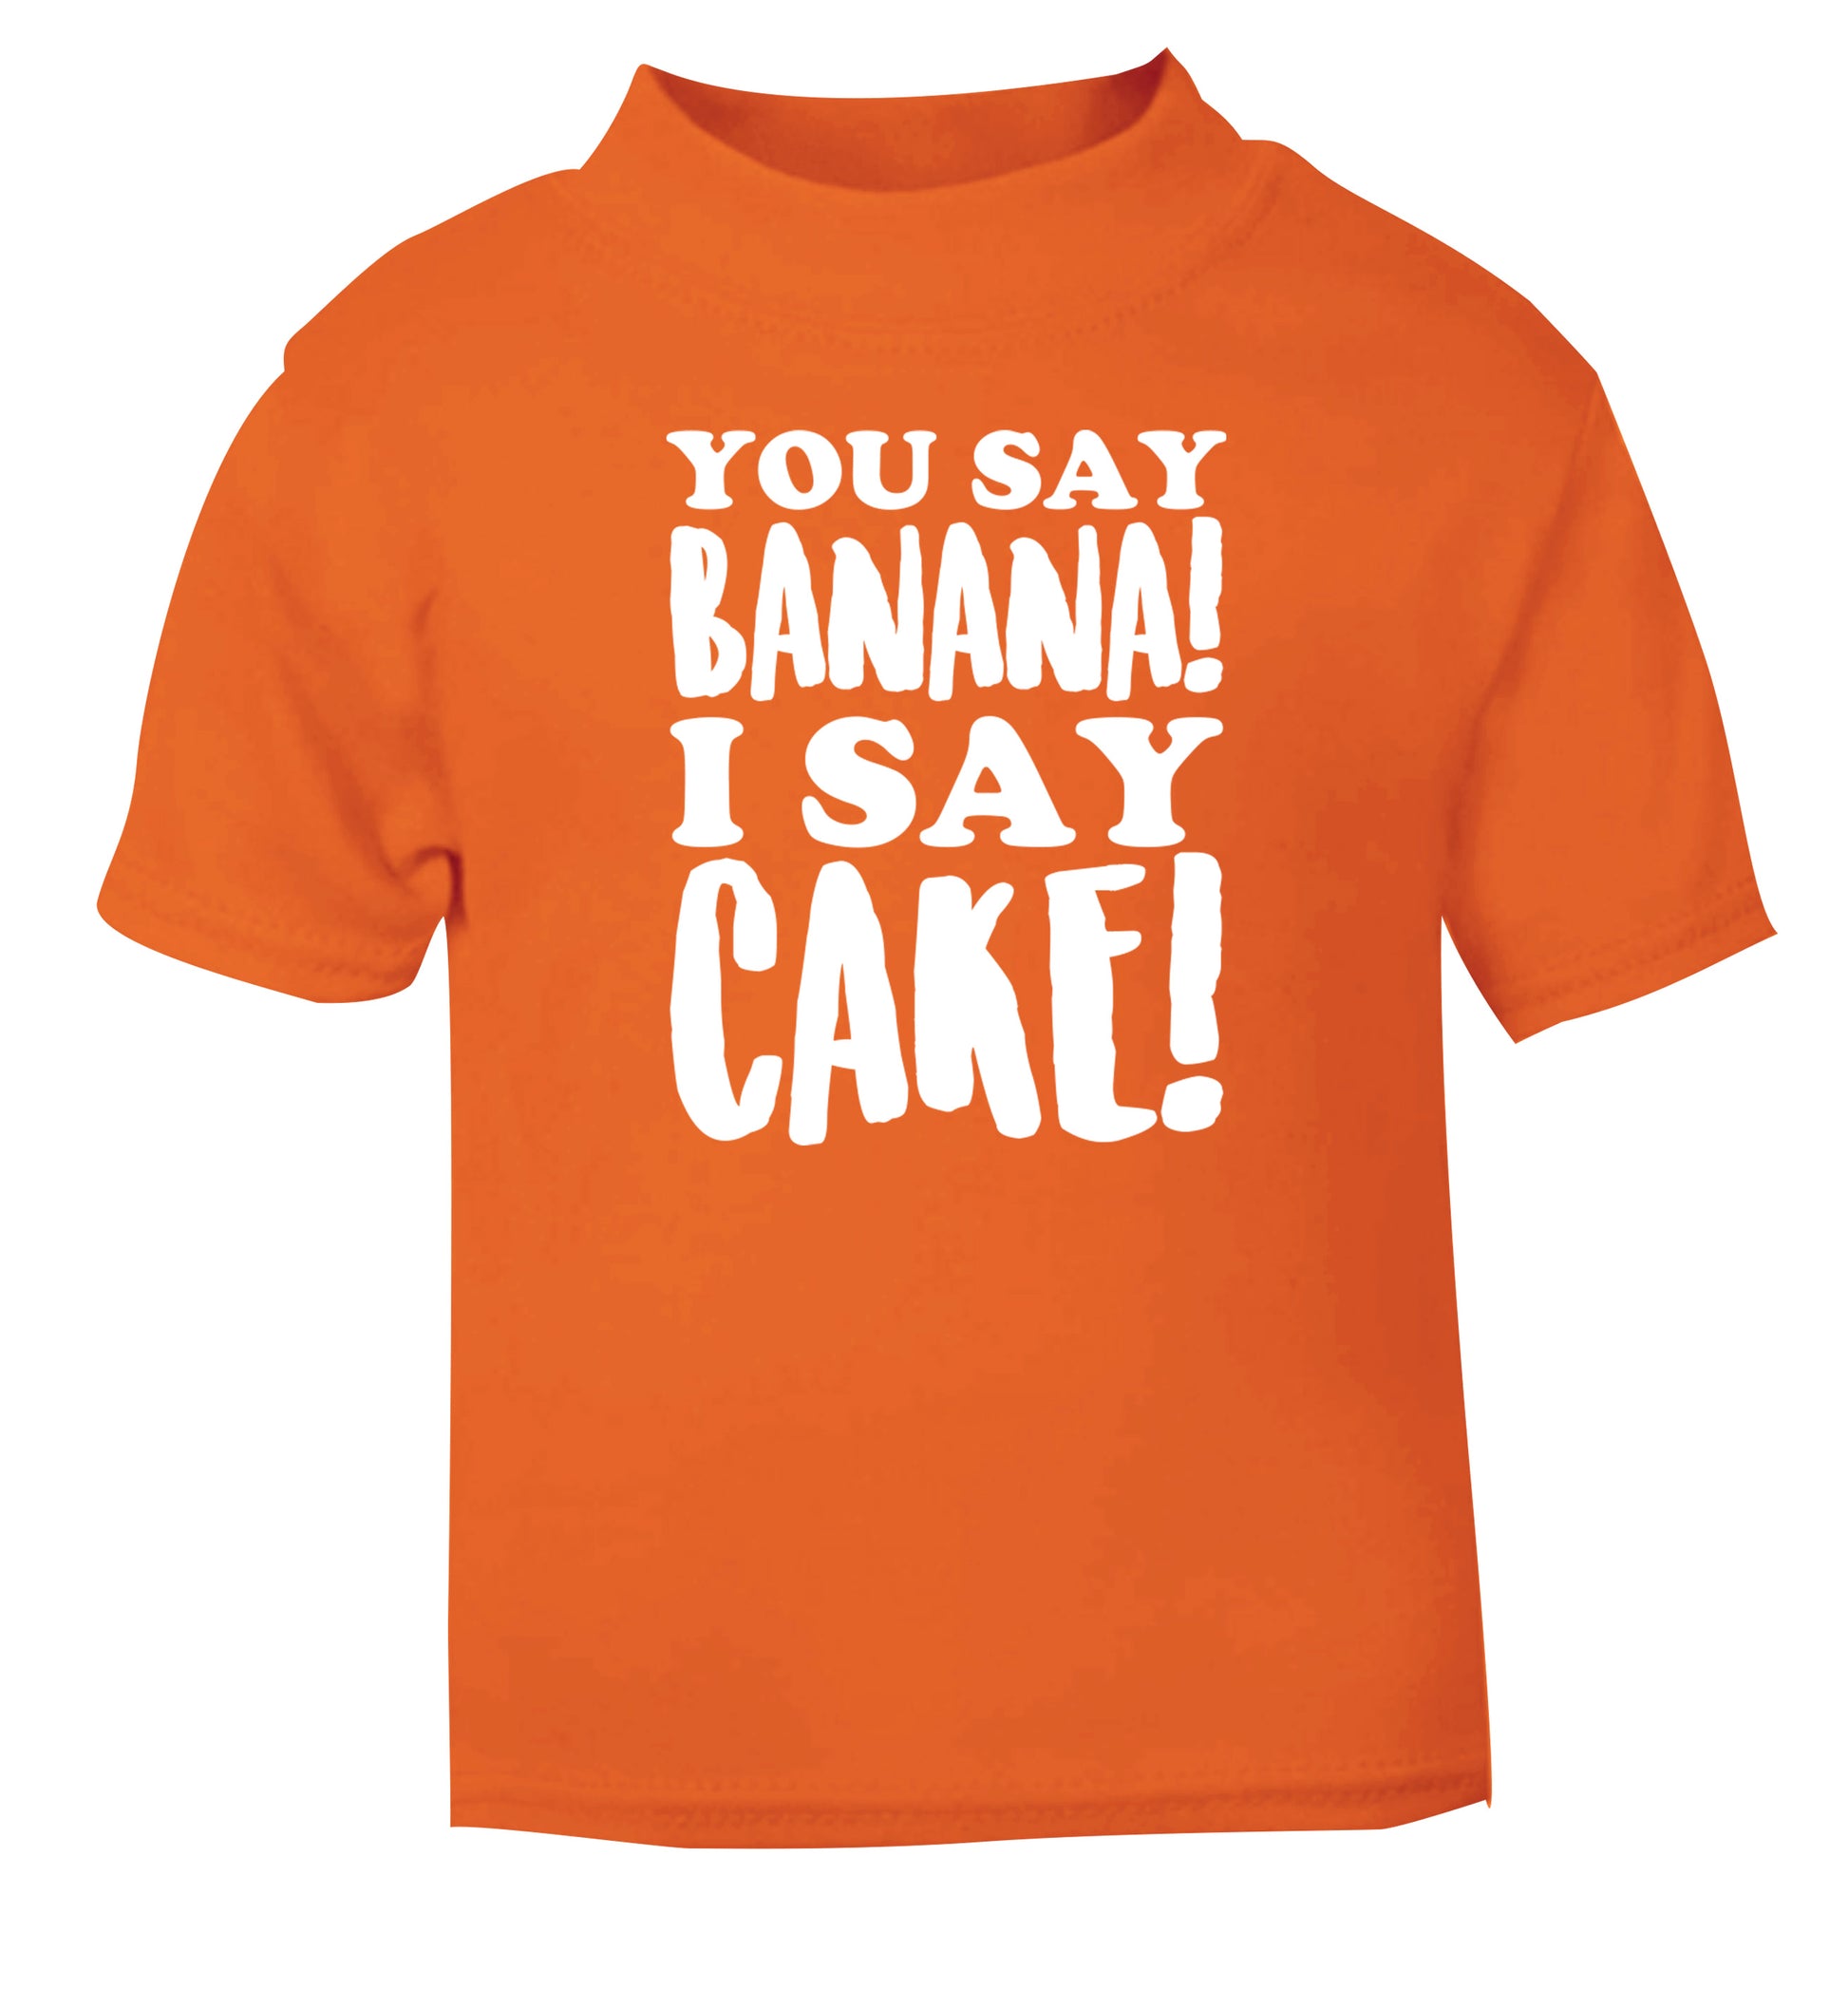 You say banana I say cake! orange Baby Toddler Tshirt 2 Years